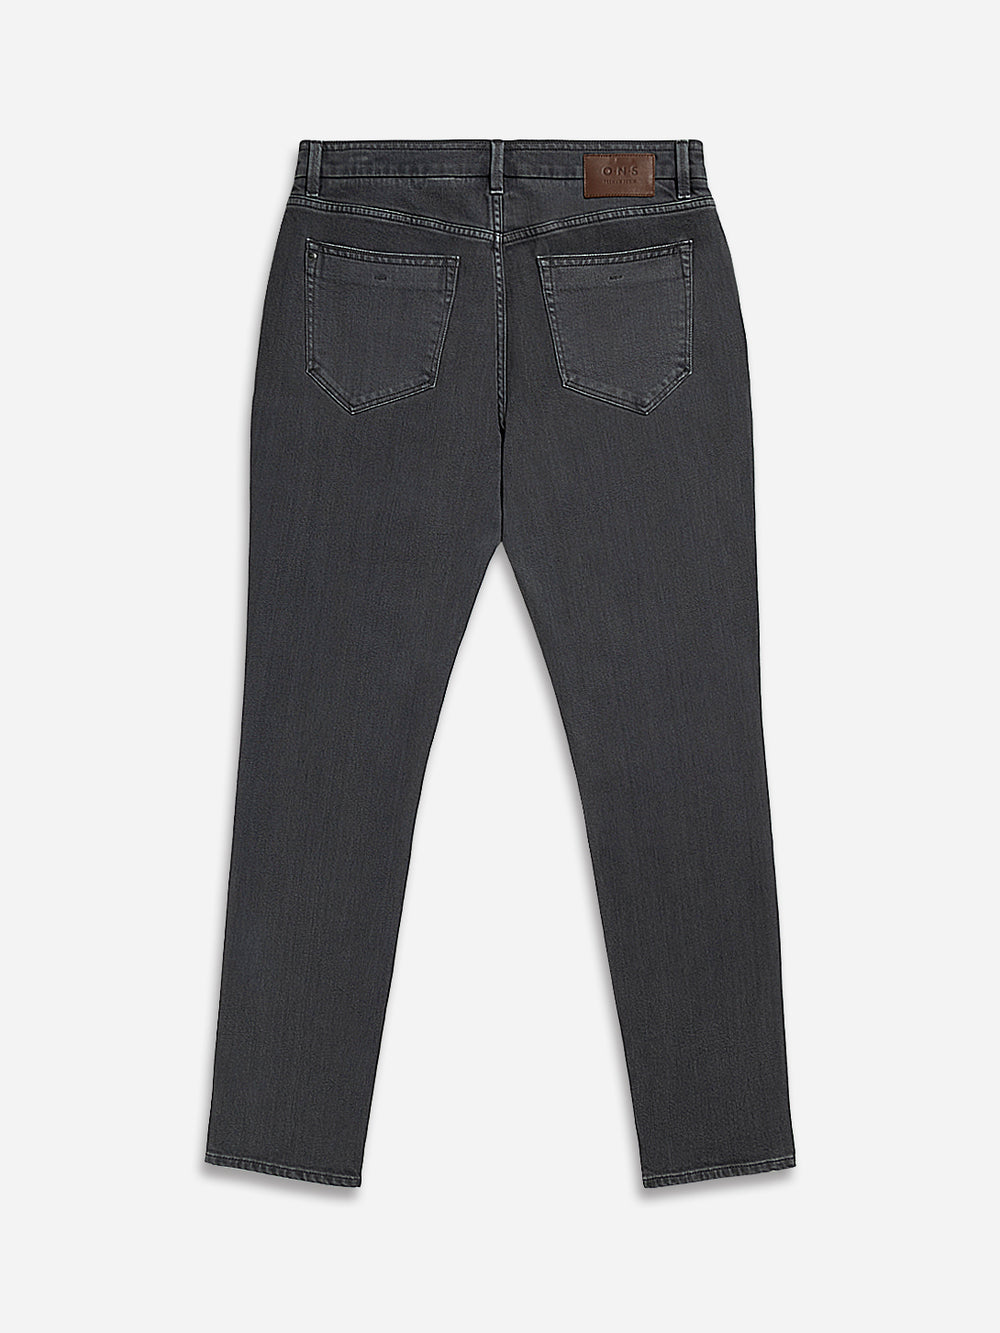 Jeans - Men's Jeans : Shop Men's Jeans online | O.N.S